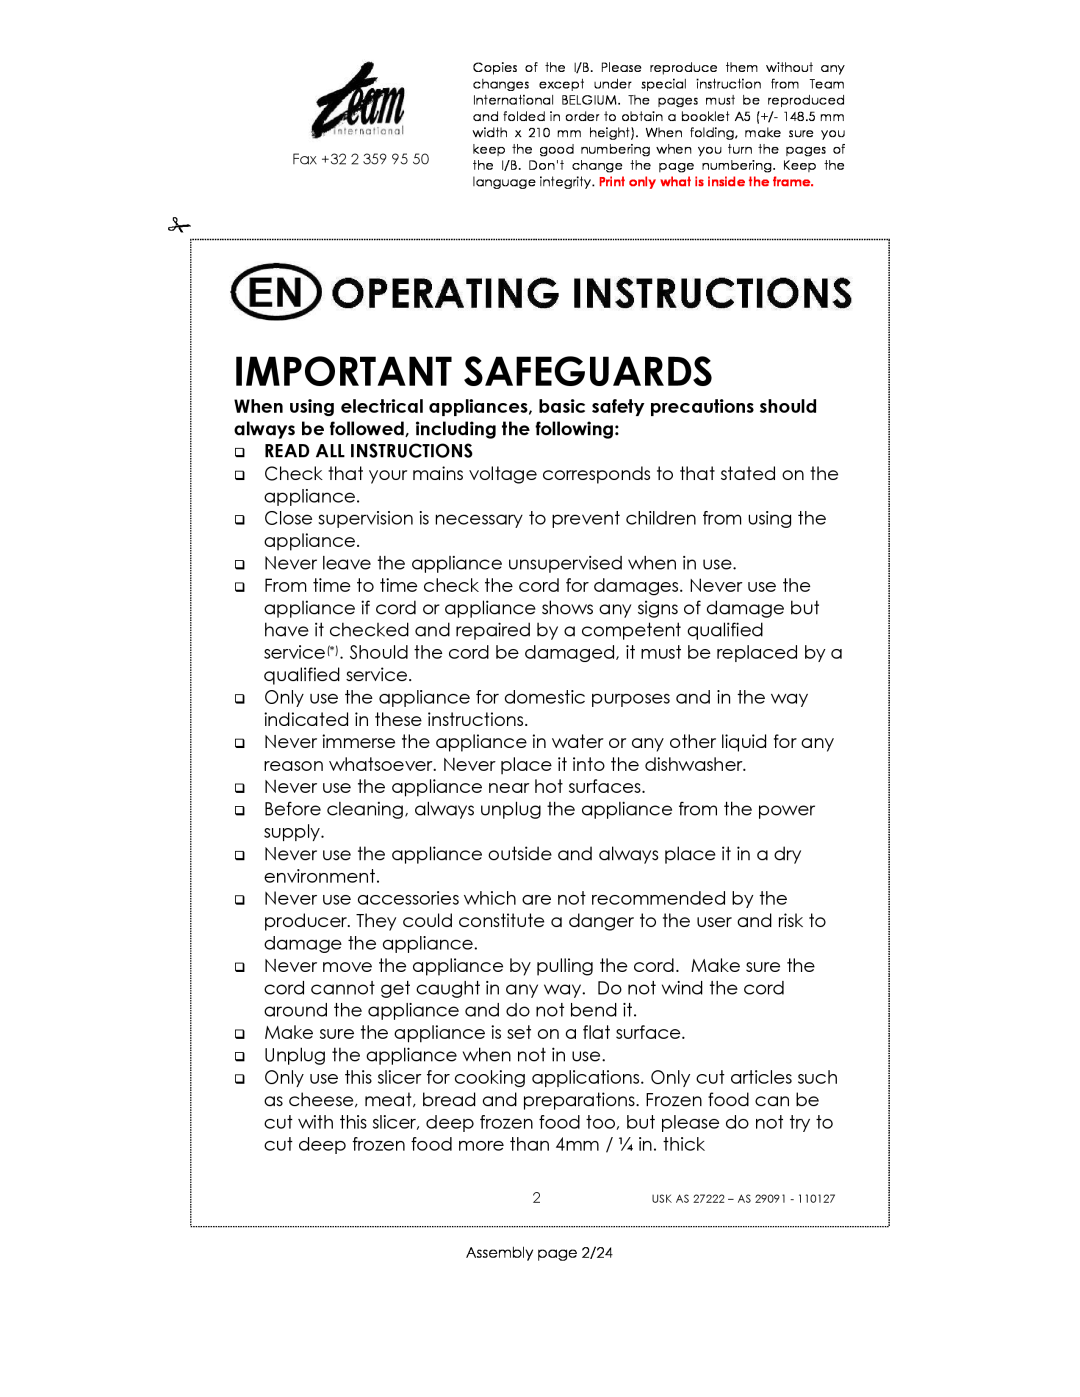 Kalorik USK AS 29091, USK AS 27222 manual Important Safeguards, Read All Instructions 